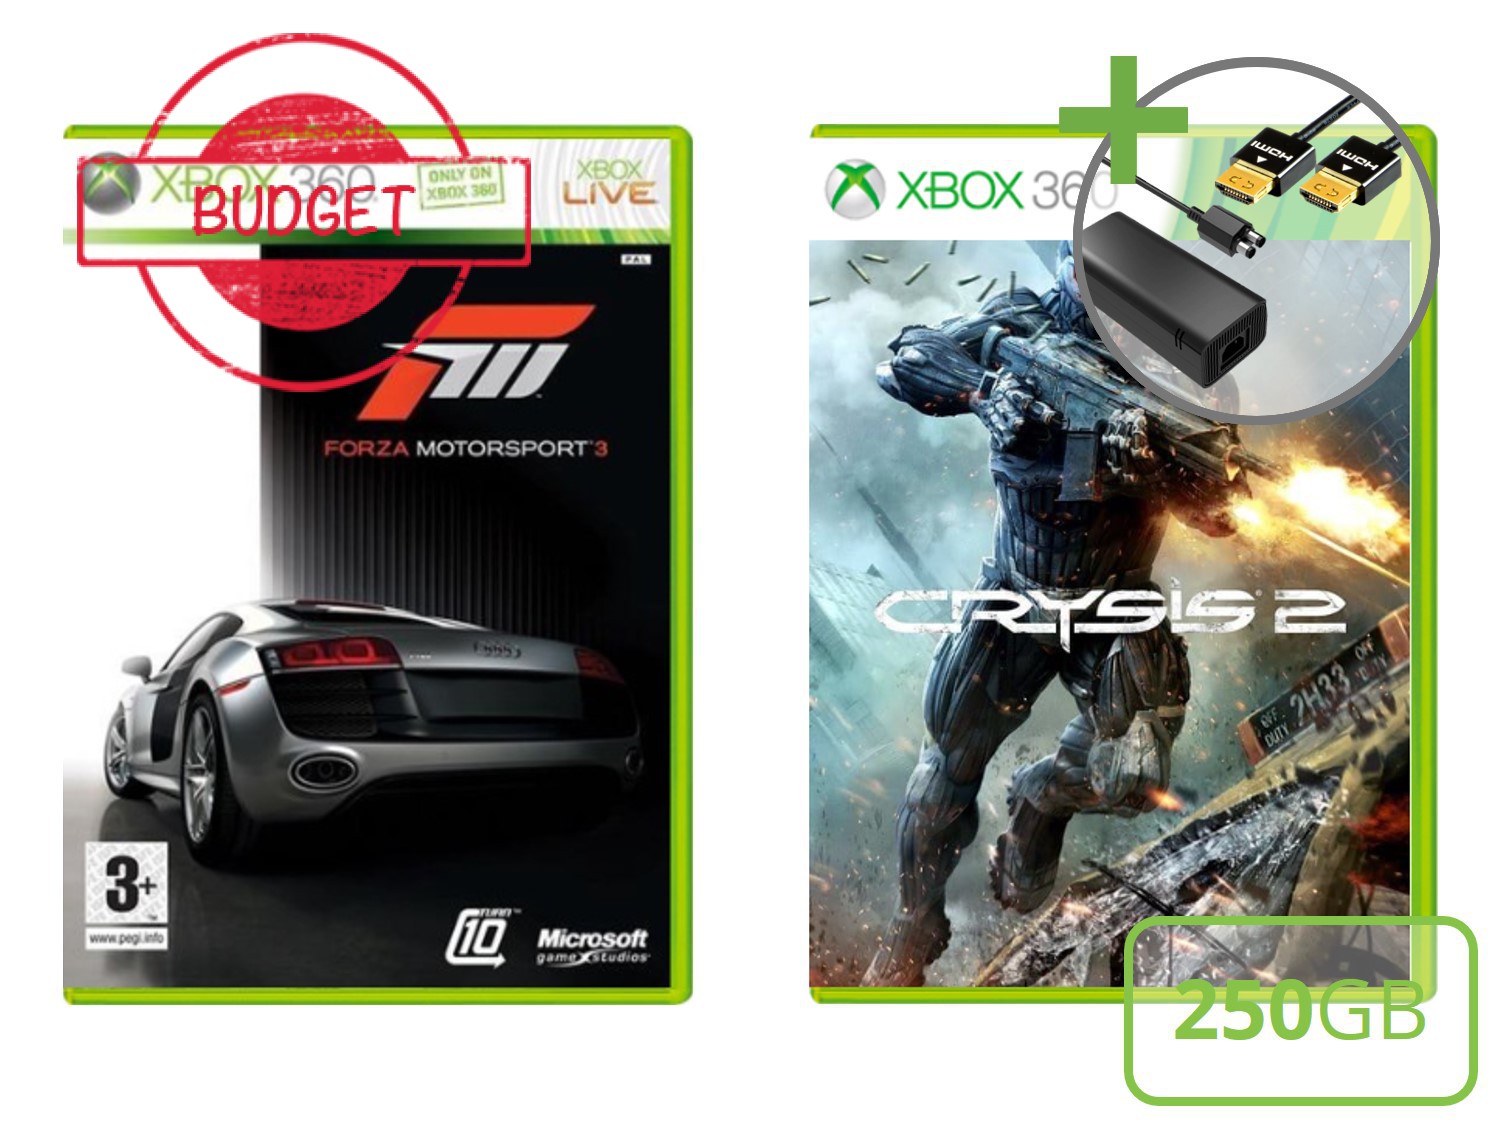 Microsoft Xbox 360 Slim Starter Pack - Forza 3 and Crisis 2 Edition - Budget - Xbox 360 Hardware - 5